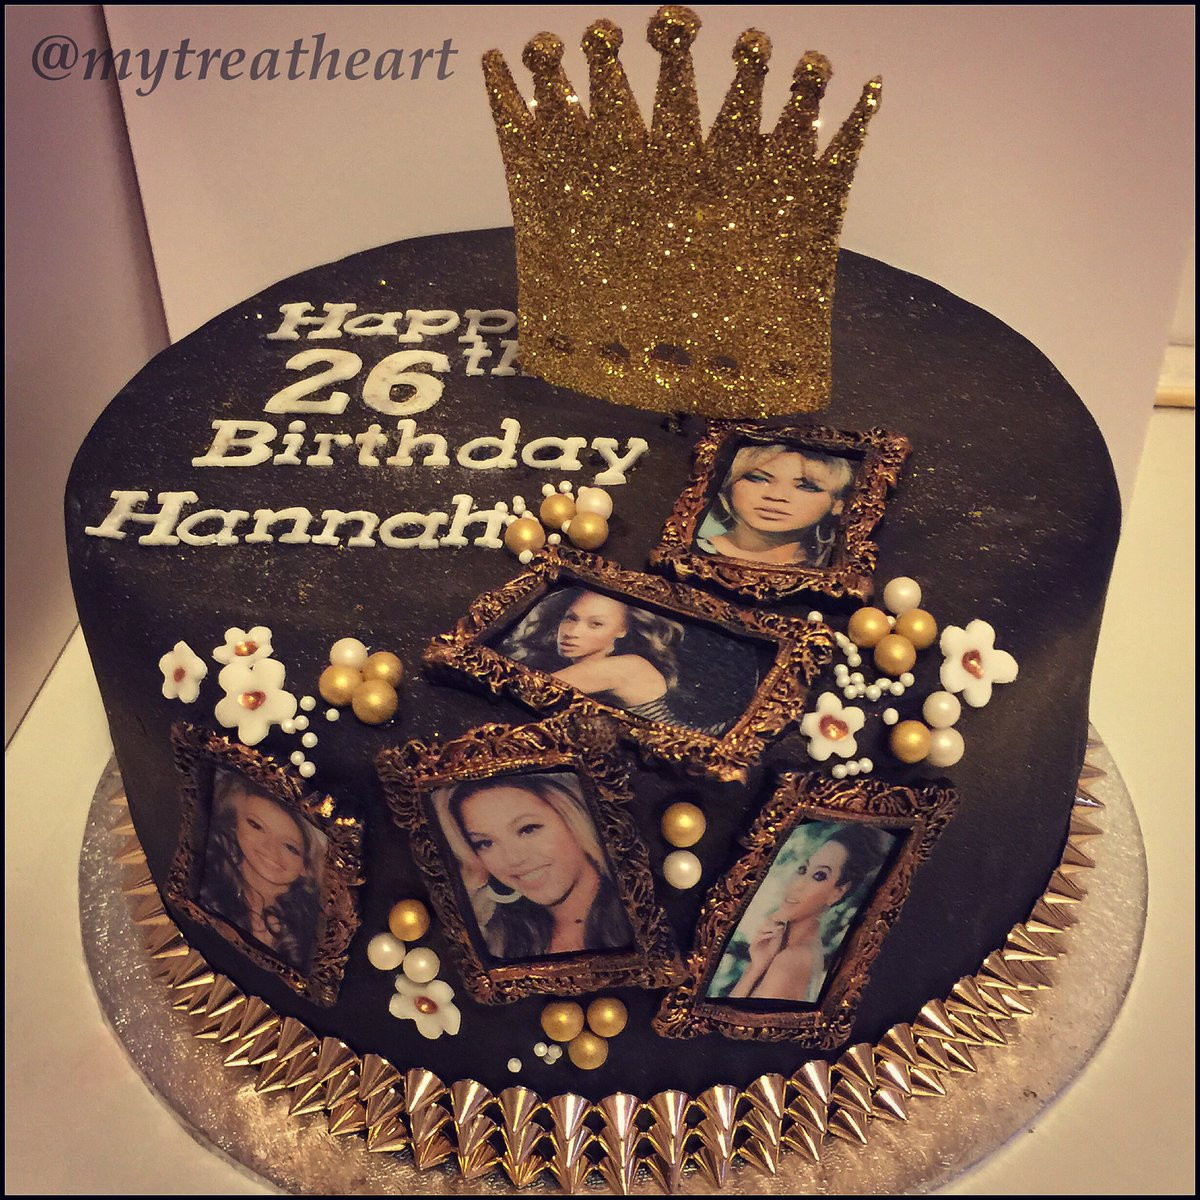 Beyonce Birthday Cake
 My TreatHeart™ on Twitter "Birthday cake for a Beyoncé